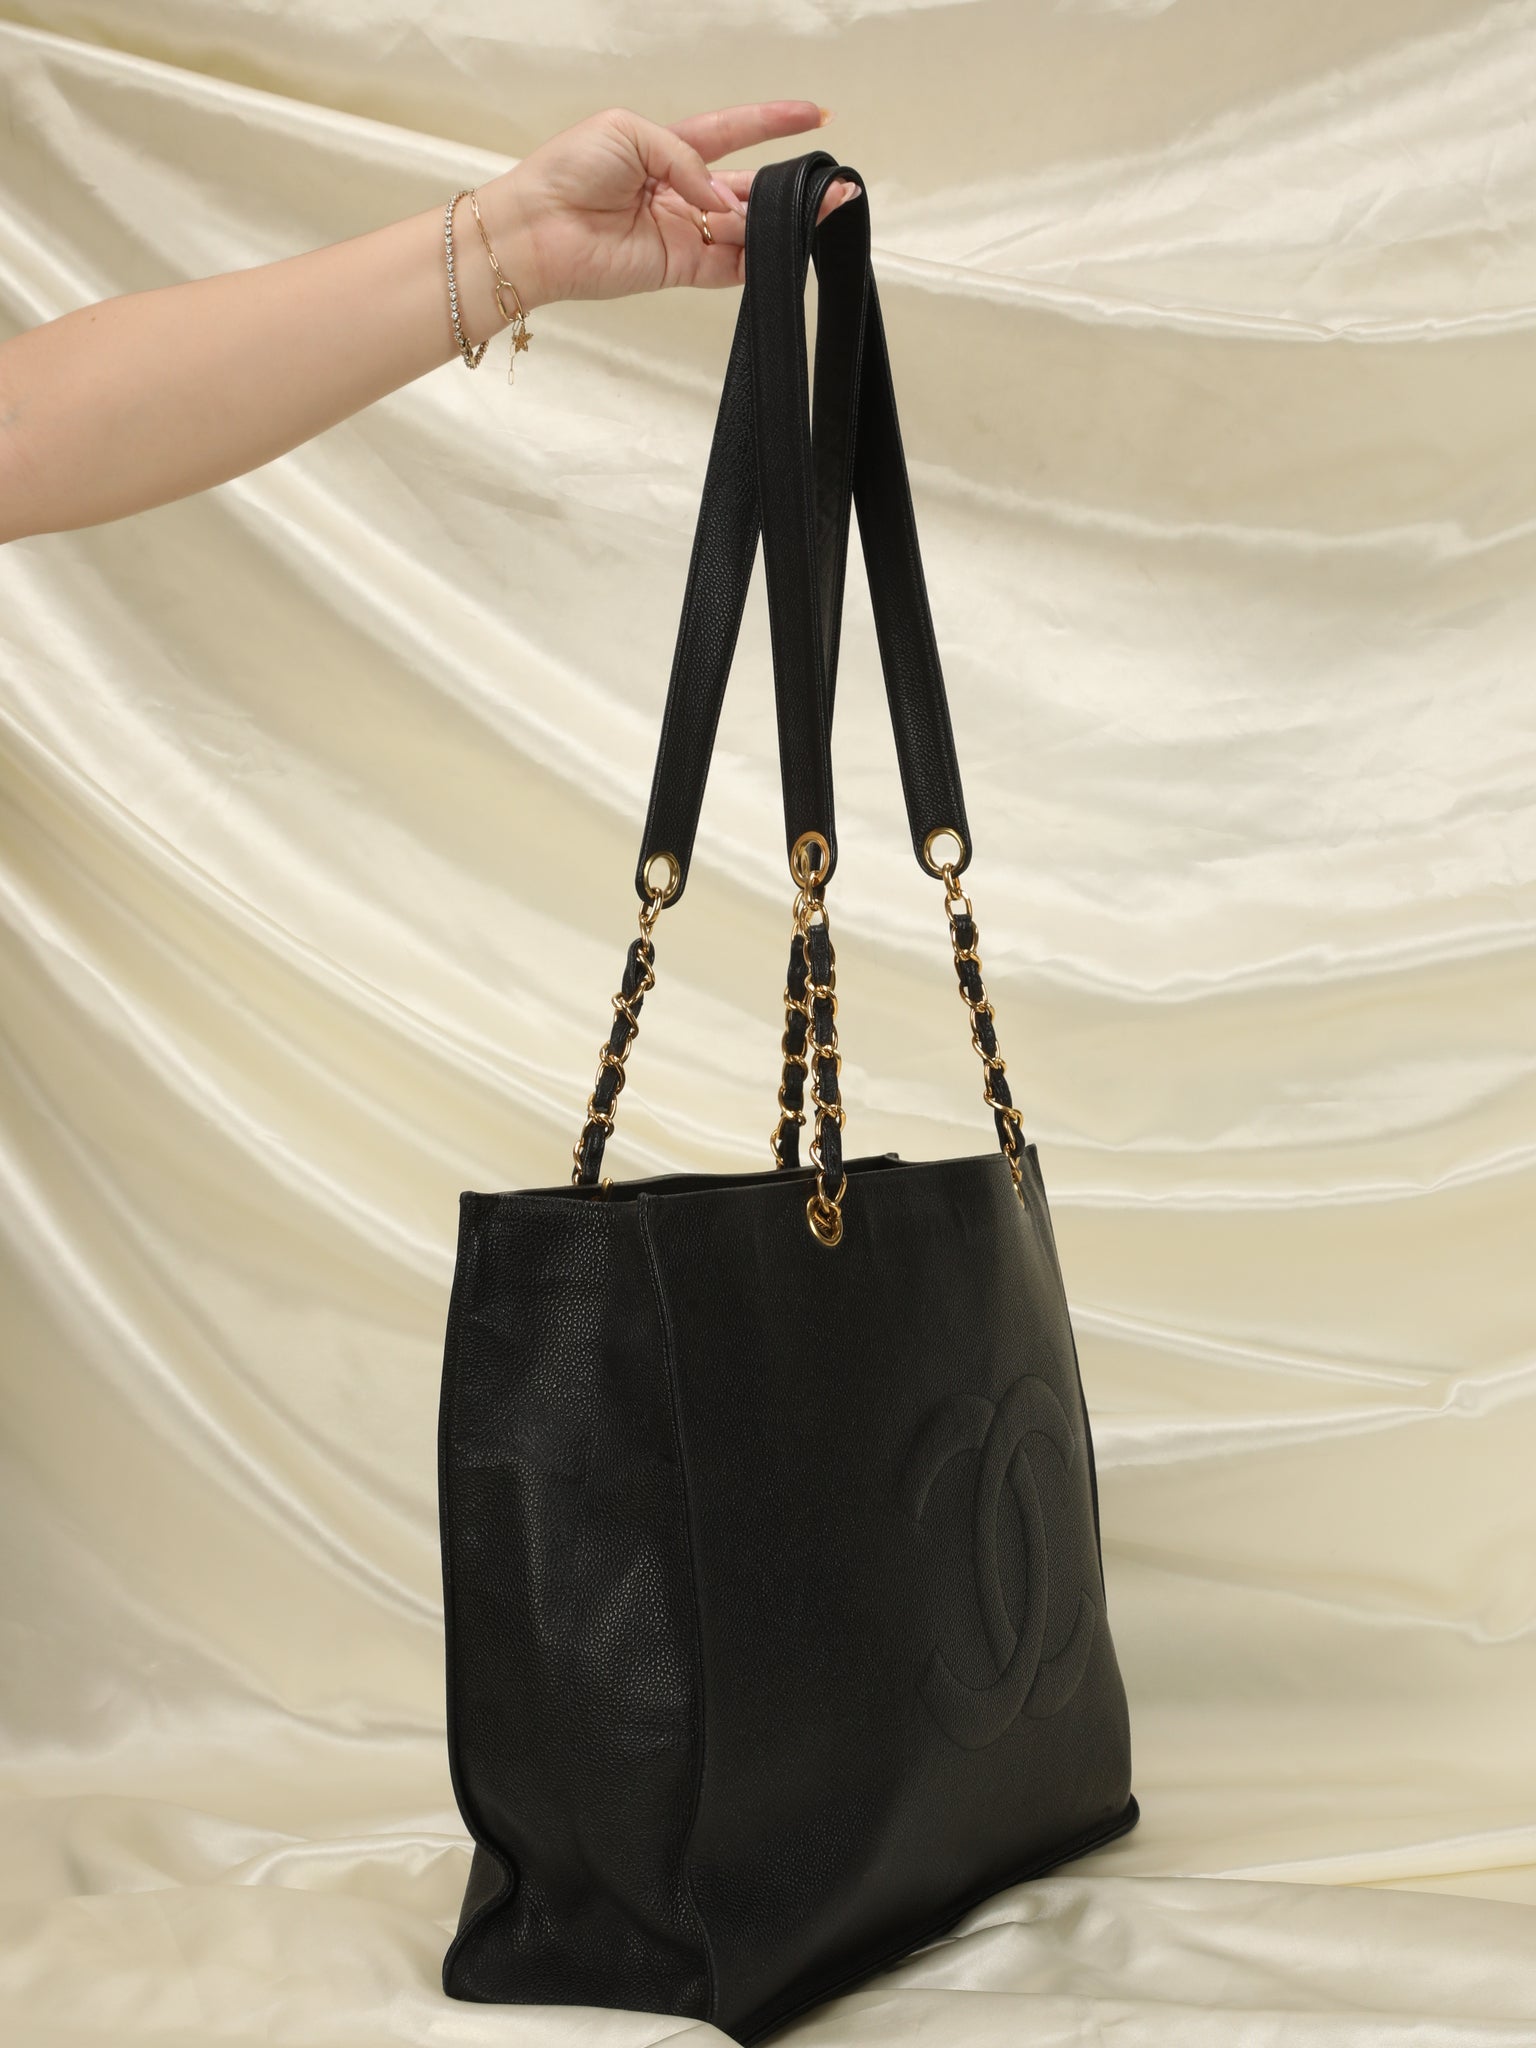 CHANEL Black Caviar Timeless Soft CC Shopping Tote Bag